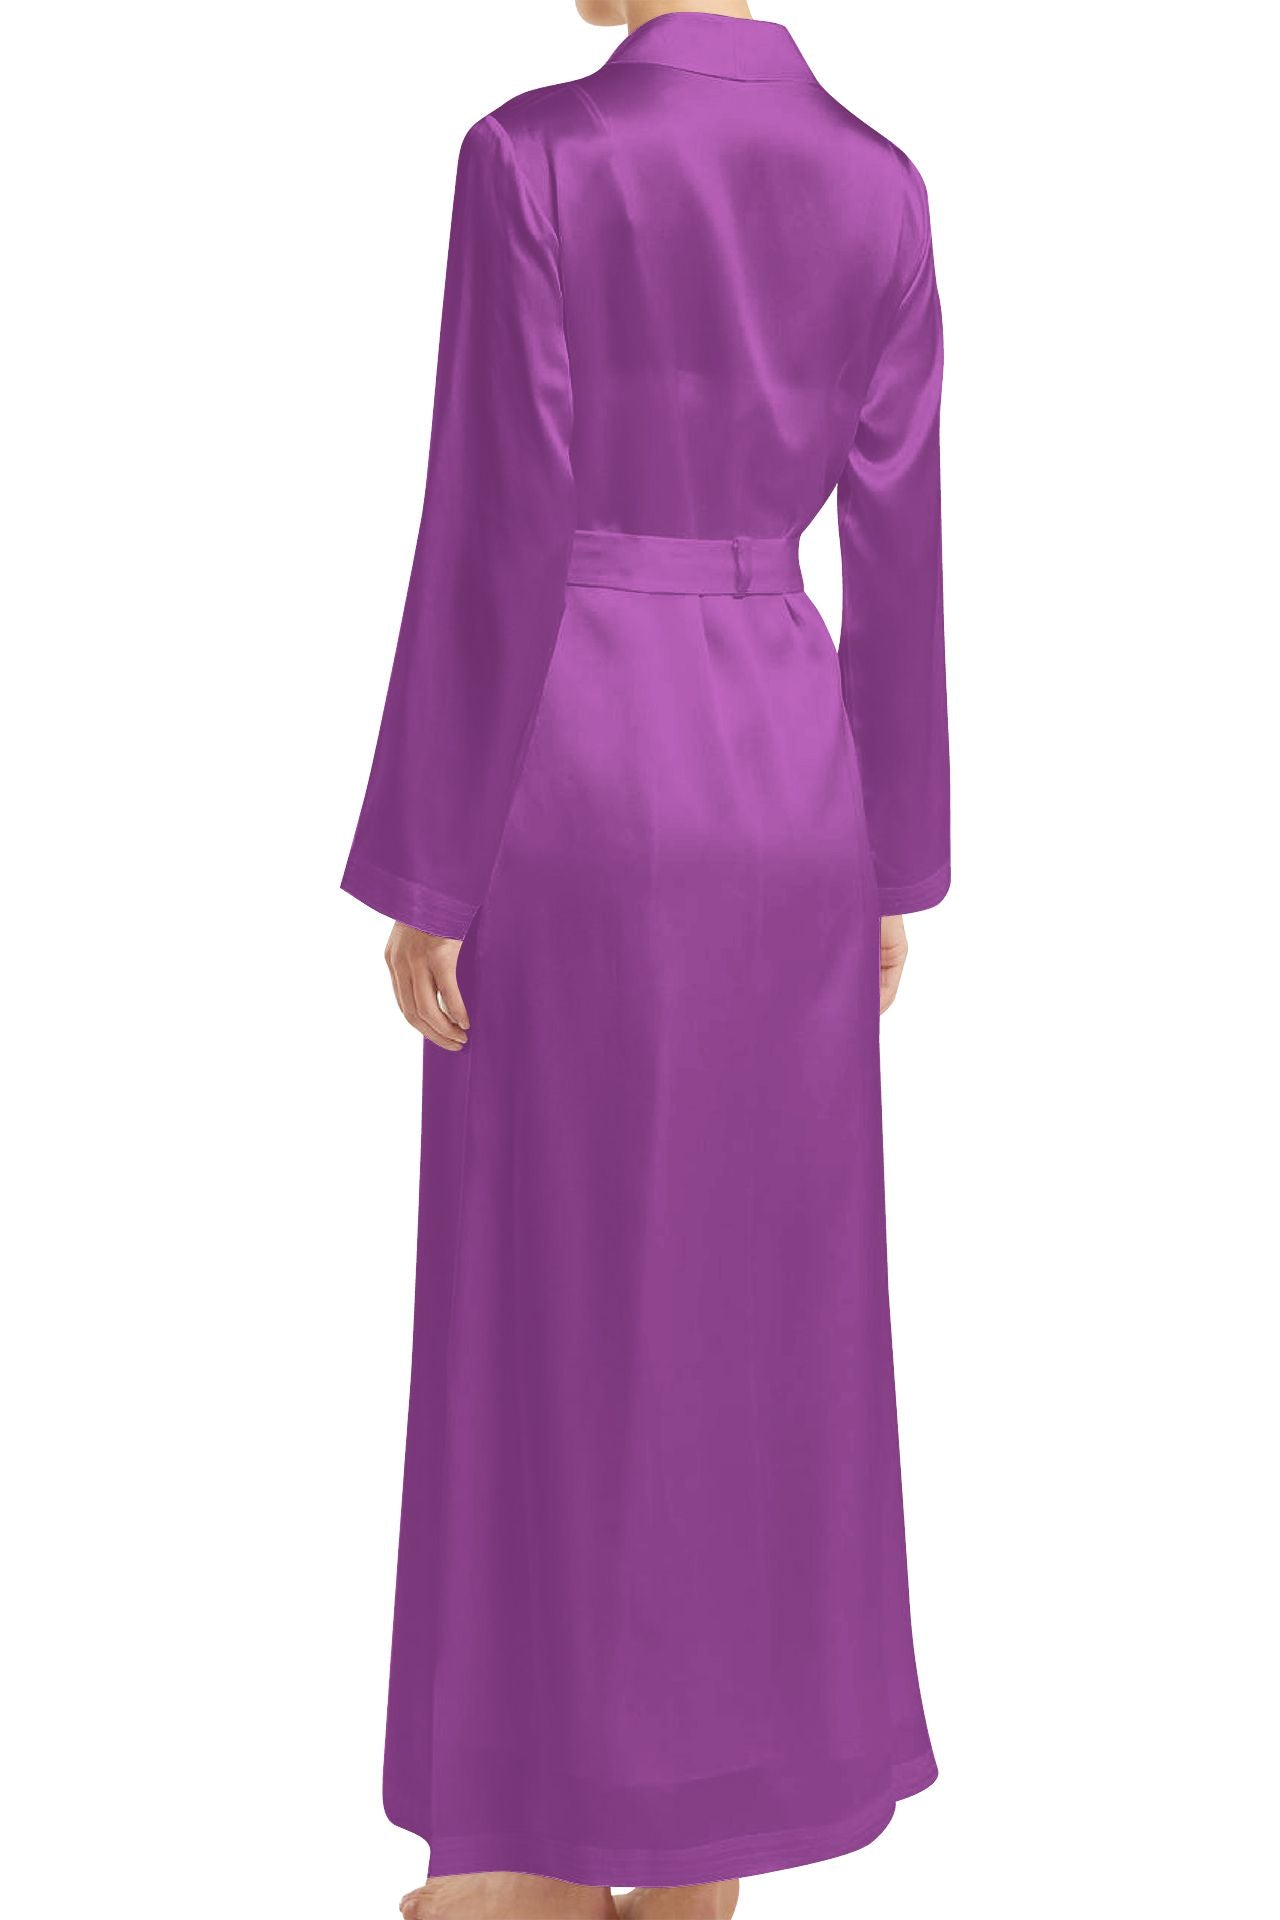 "purple wrap dress long sleeve" "wrap dress evening" "wrap purple dress" "Kyle X Shahida"